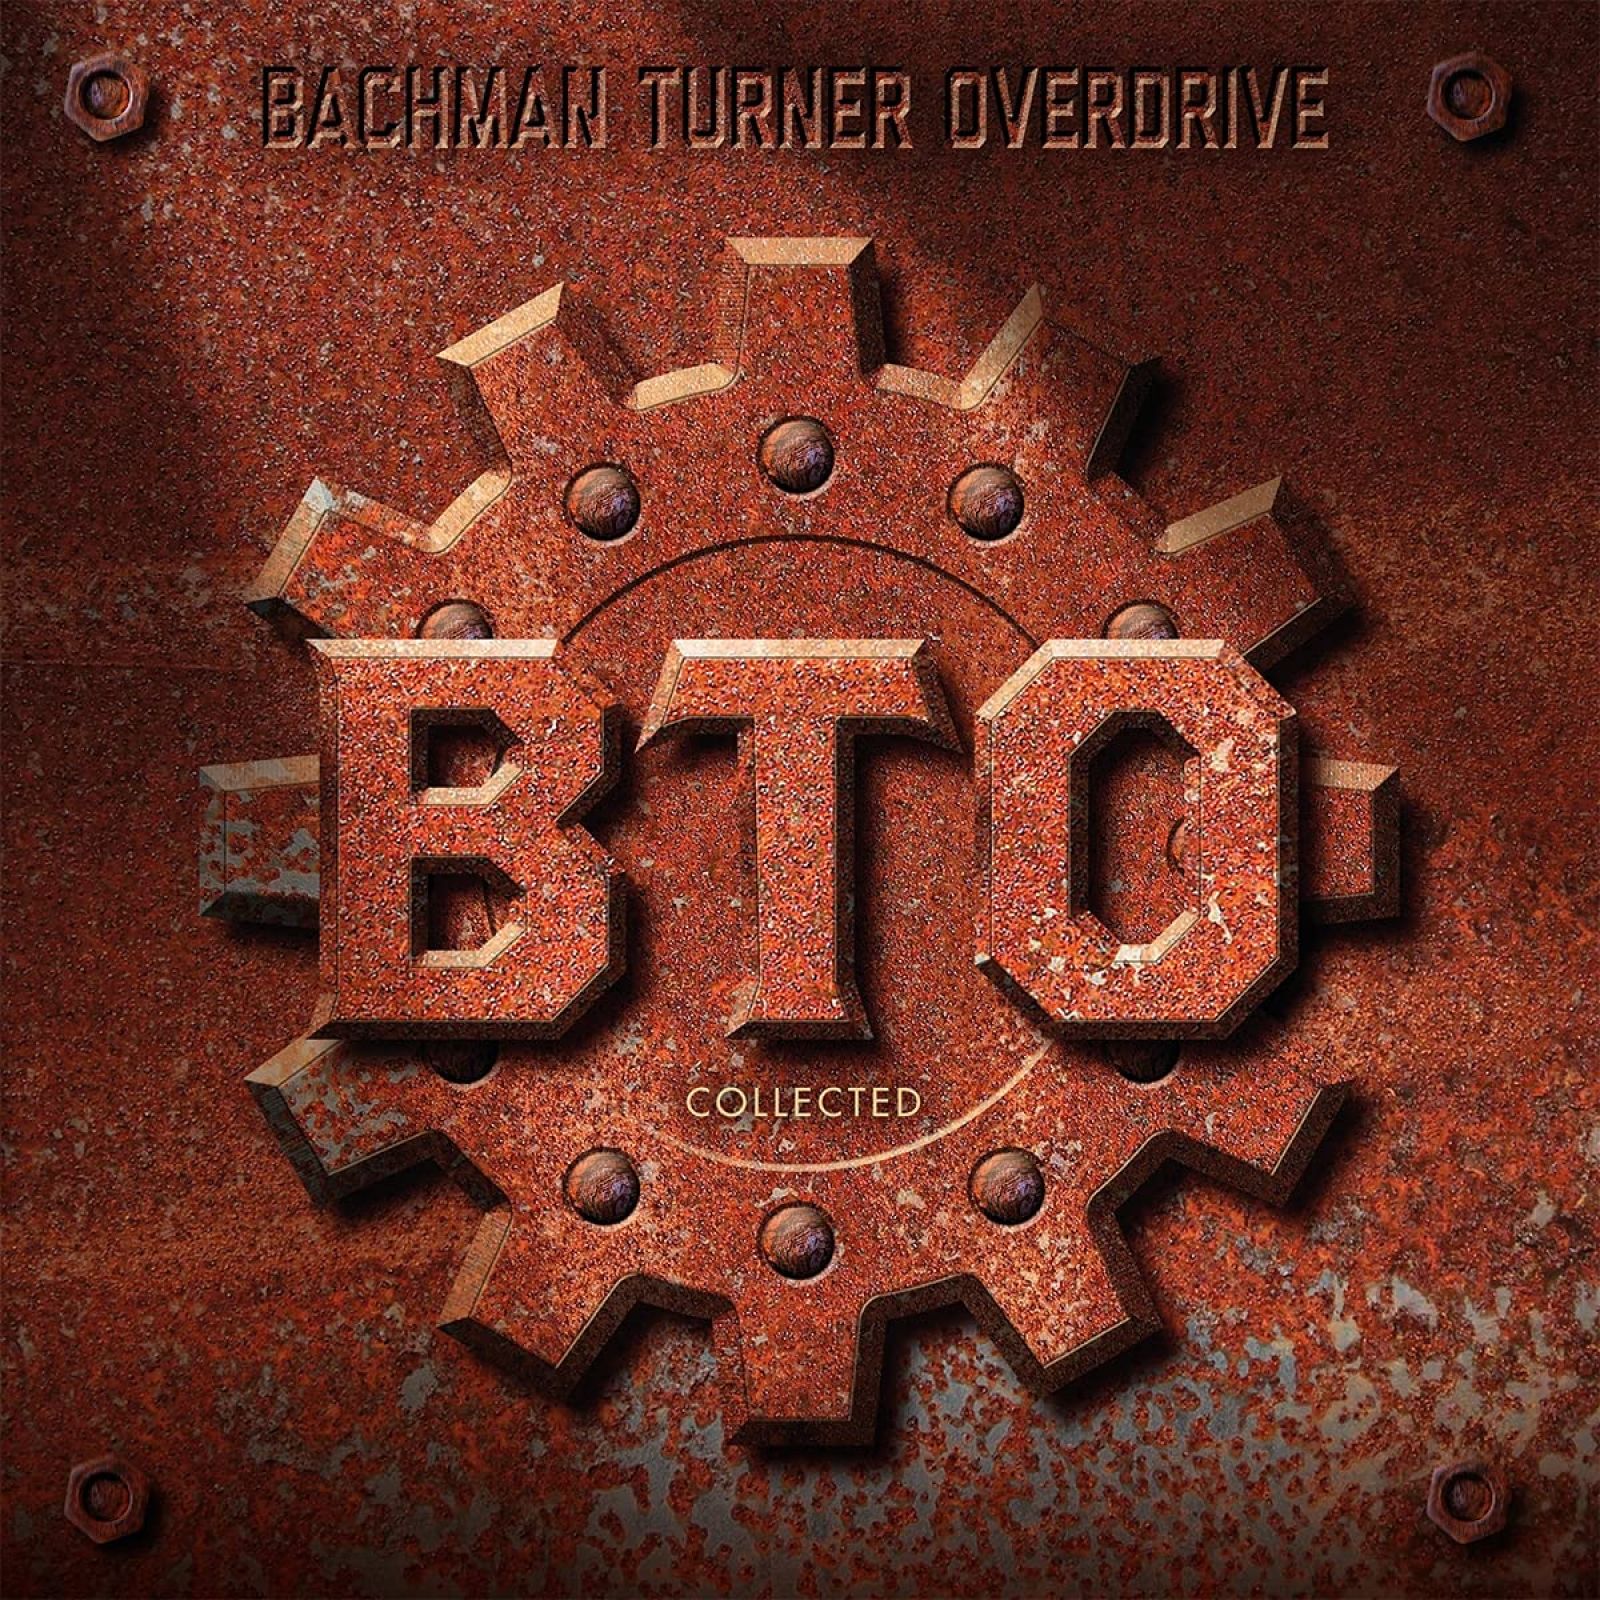 цена Виниловая пластинка Bachman Turner Overdrive, Collected: Greatest Songs (0600753911327)